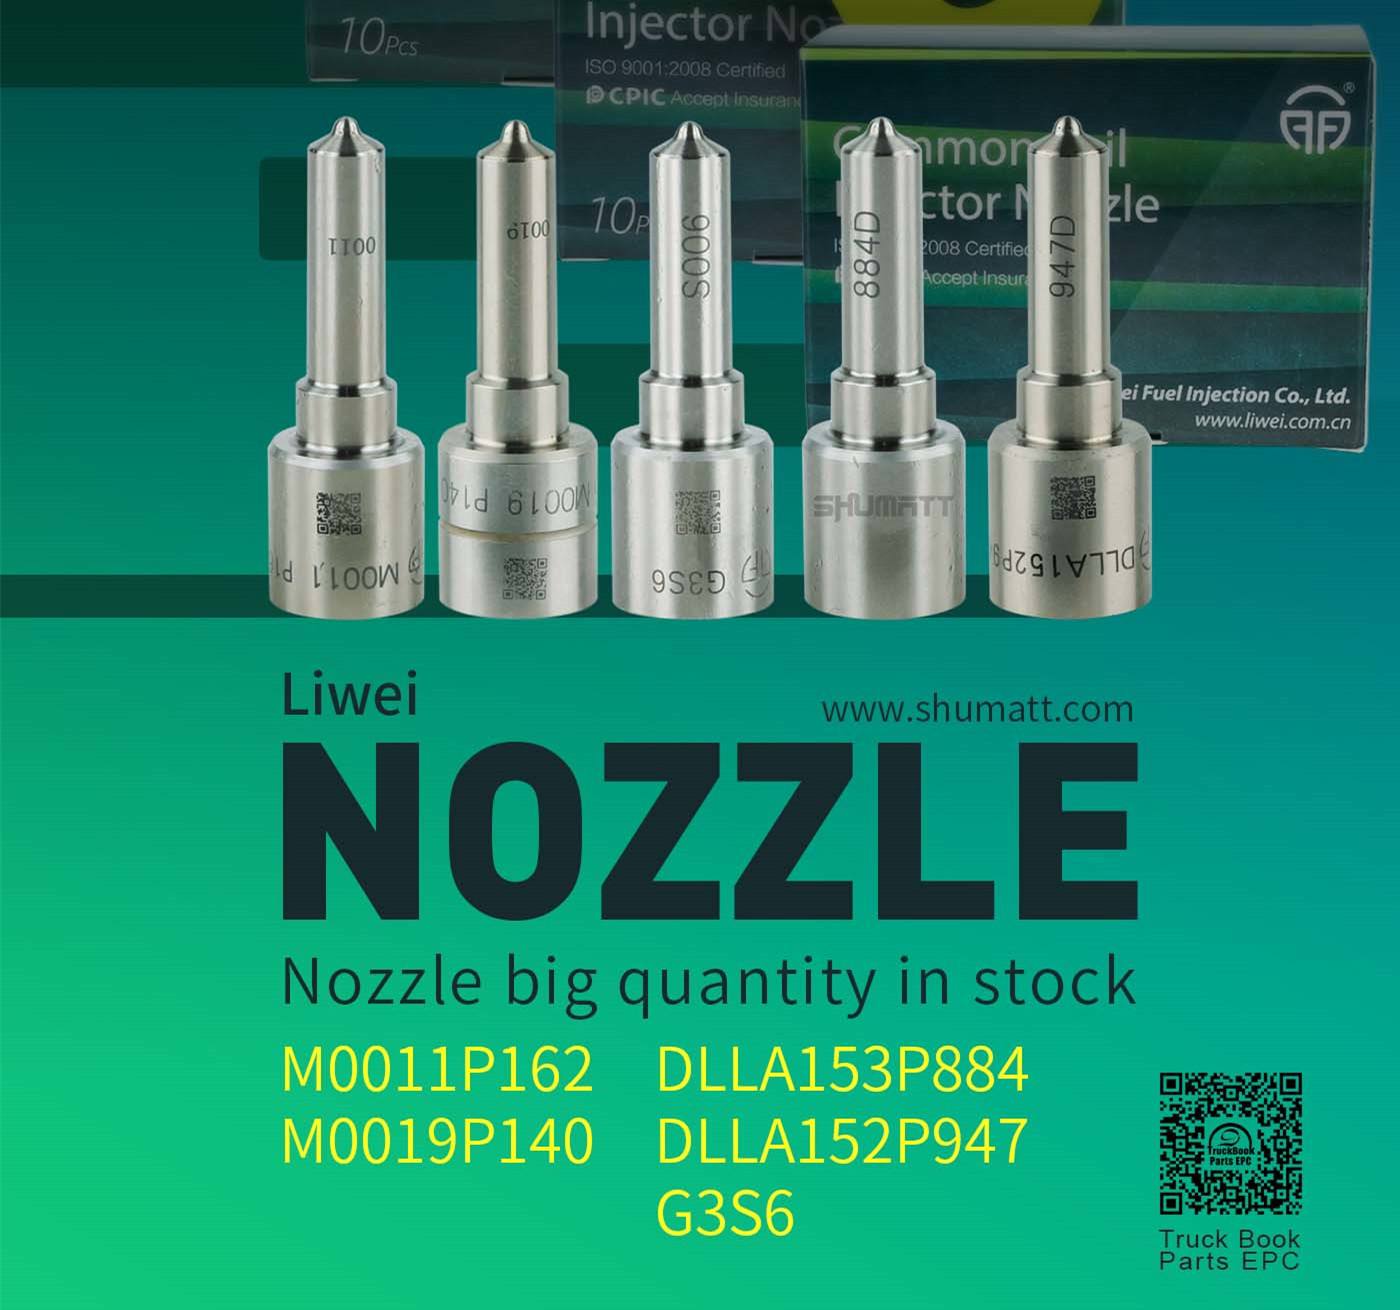 liwei-injector-nozzle-promotion.jpg